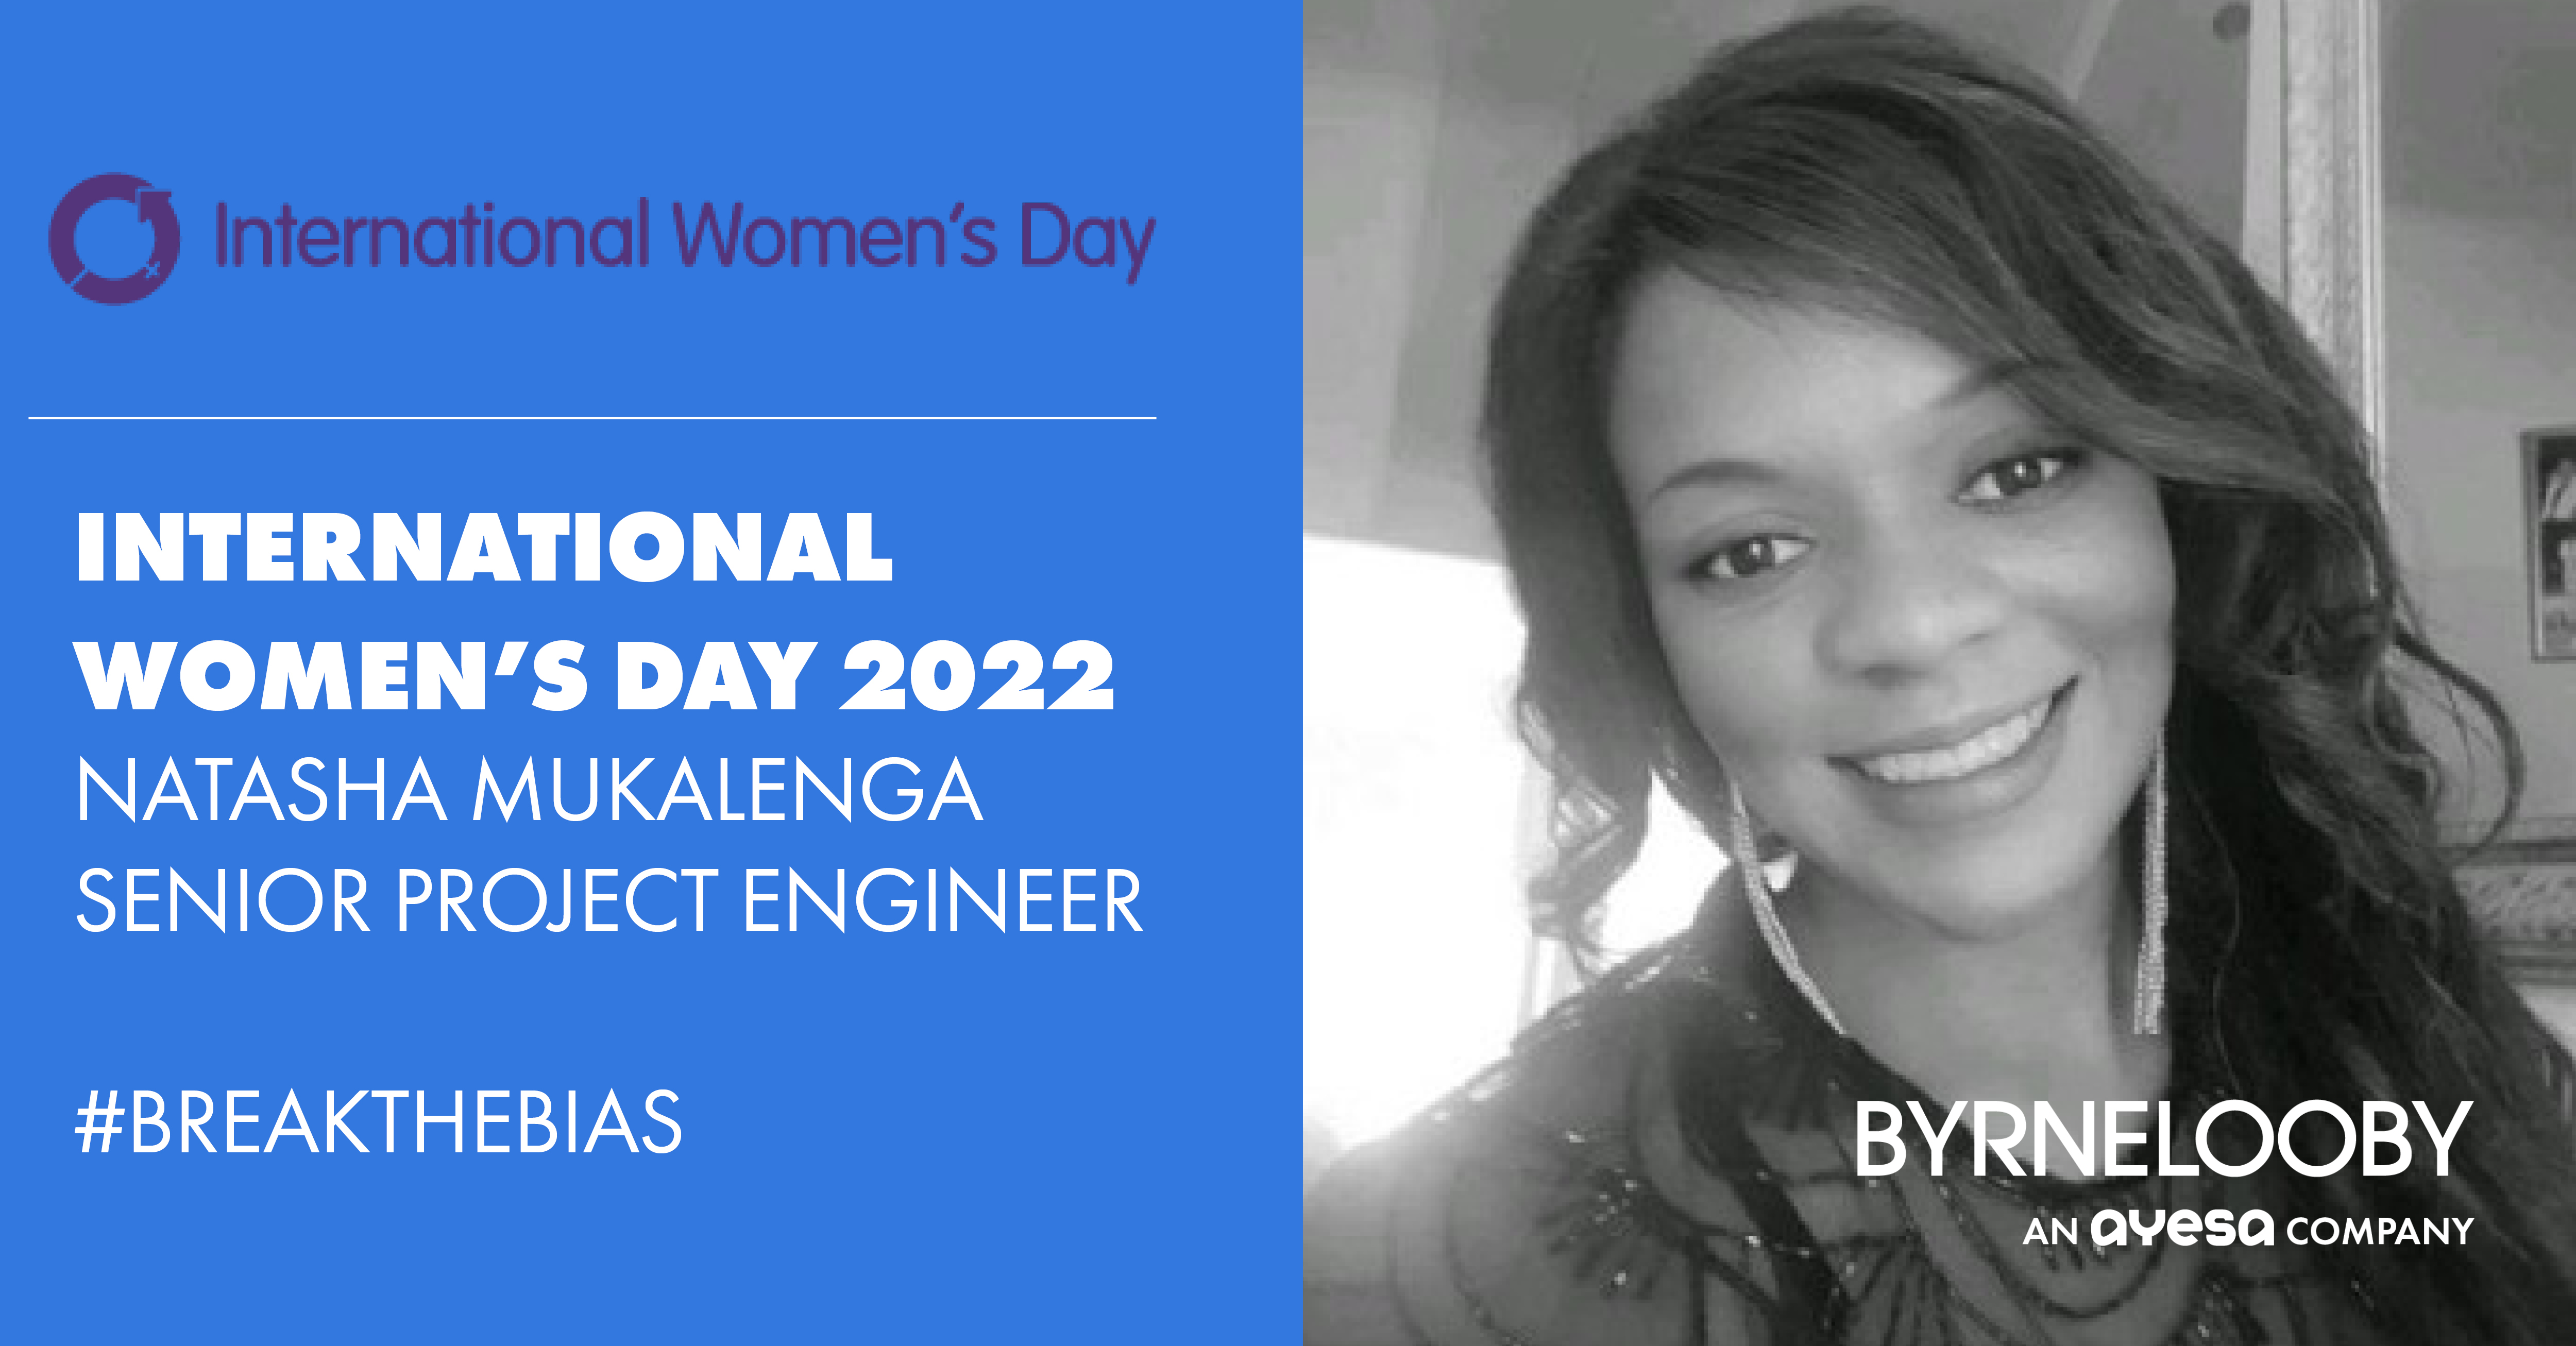 ByrneLooby celebrates International Women's Day 2022